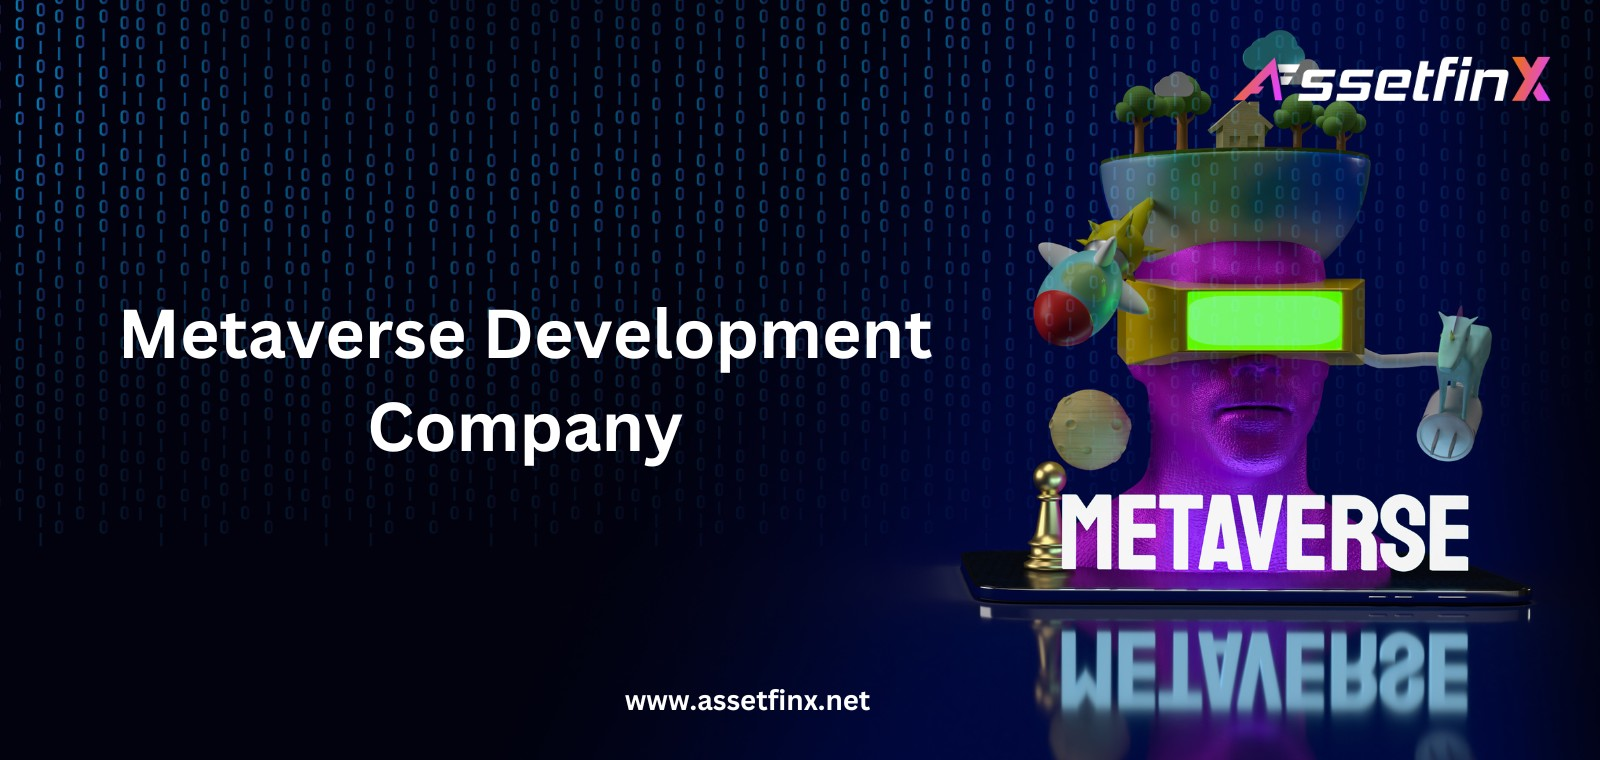 Metaverse Development Company - AssetfinX